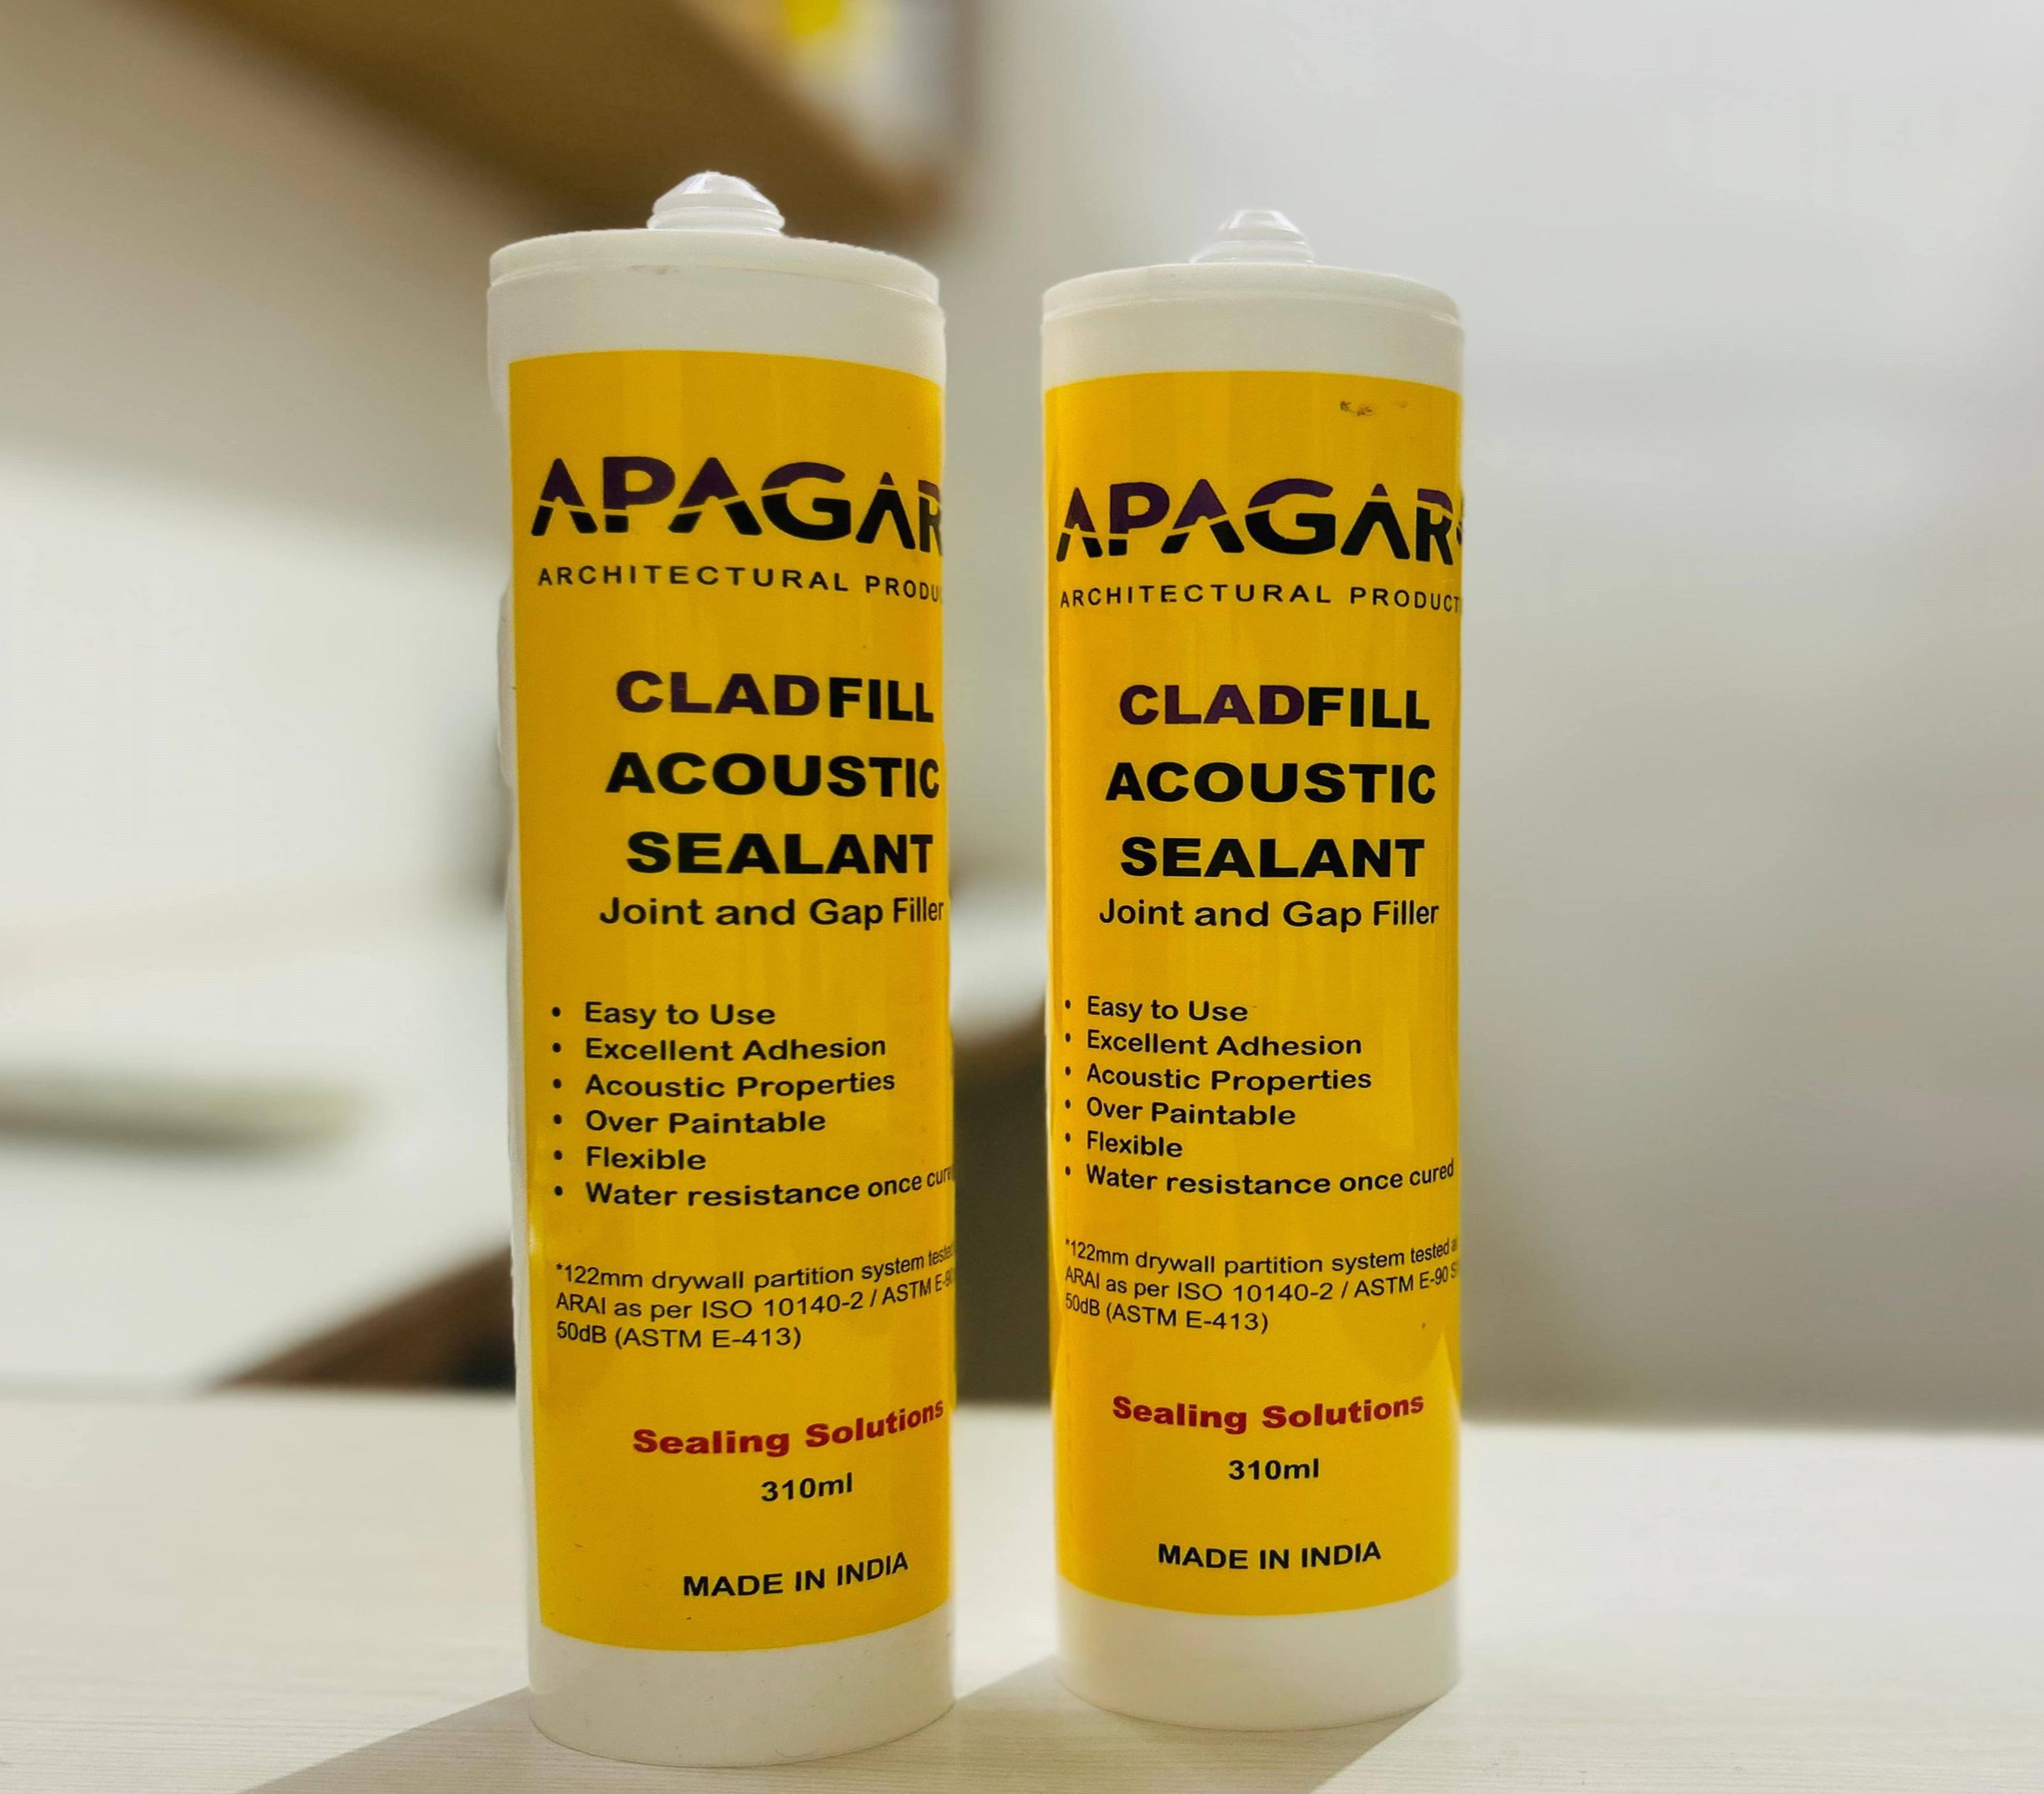 Apagar Cladfill Acoustic Sealant